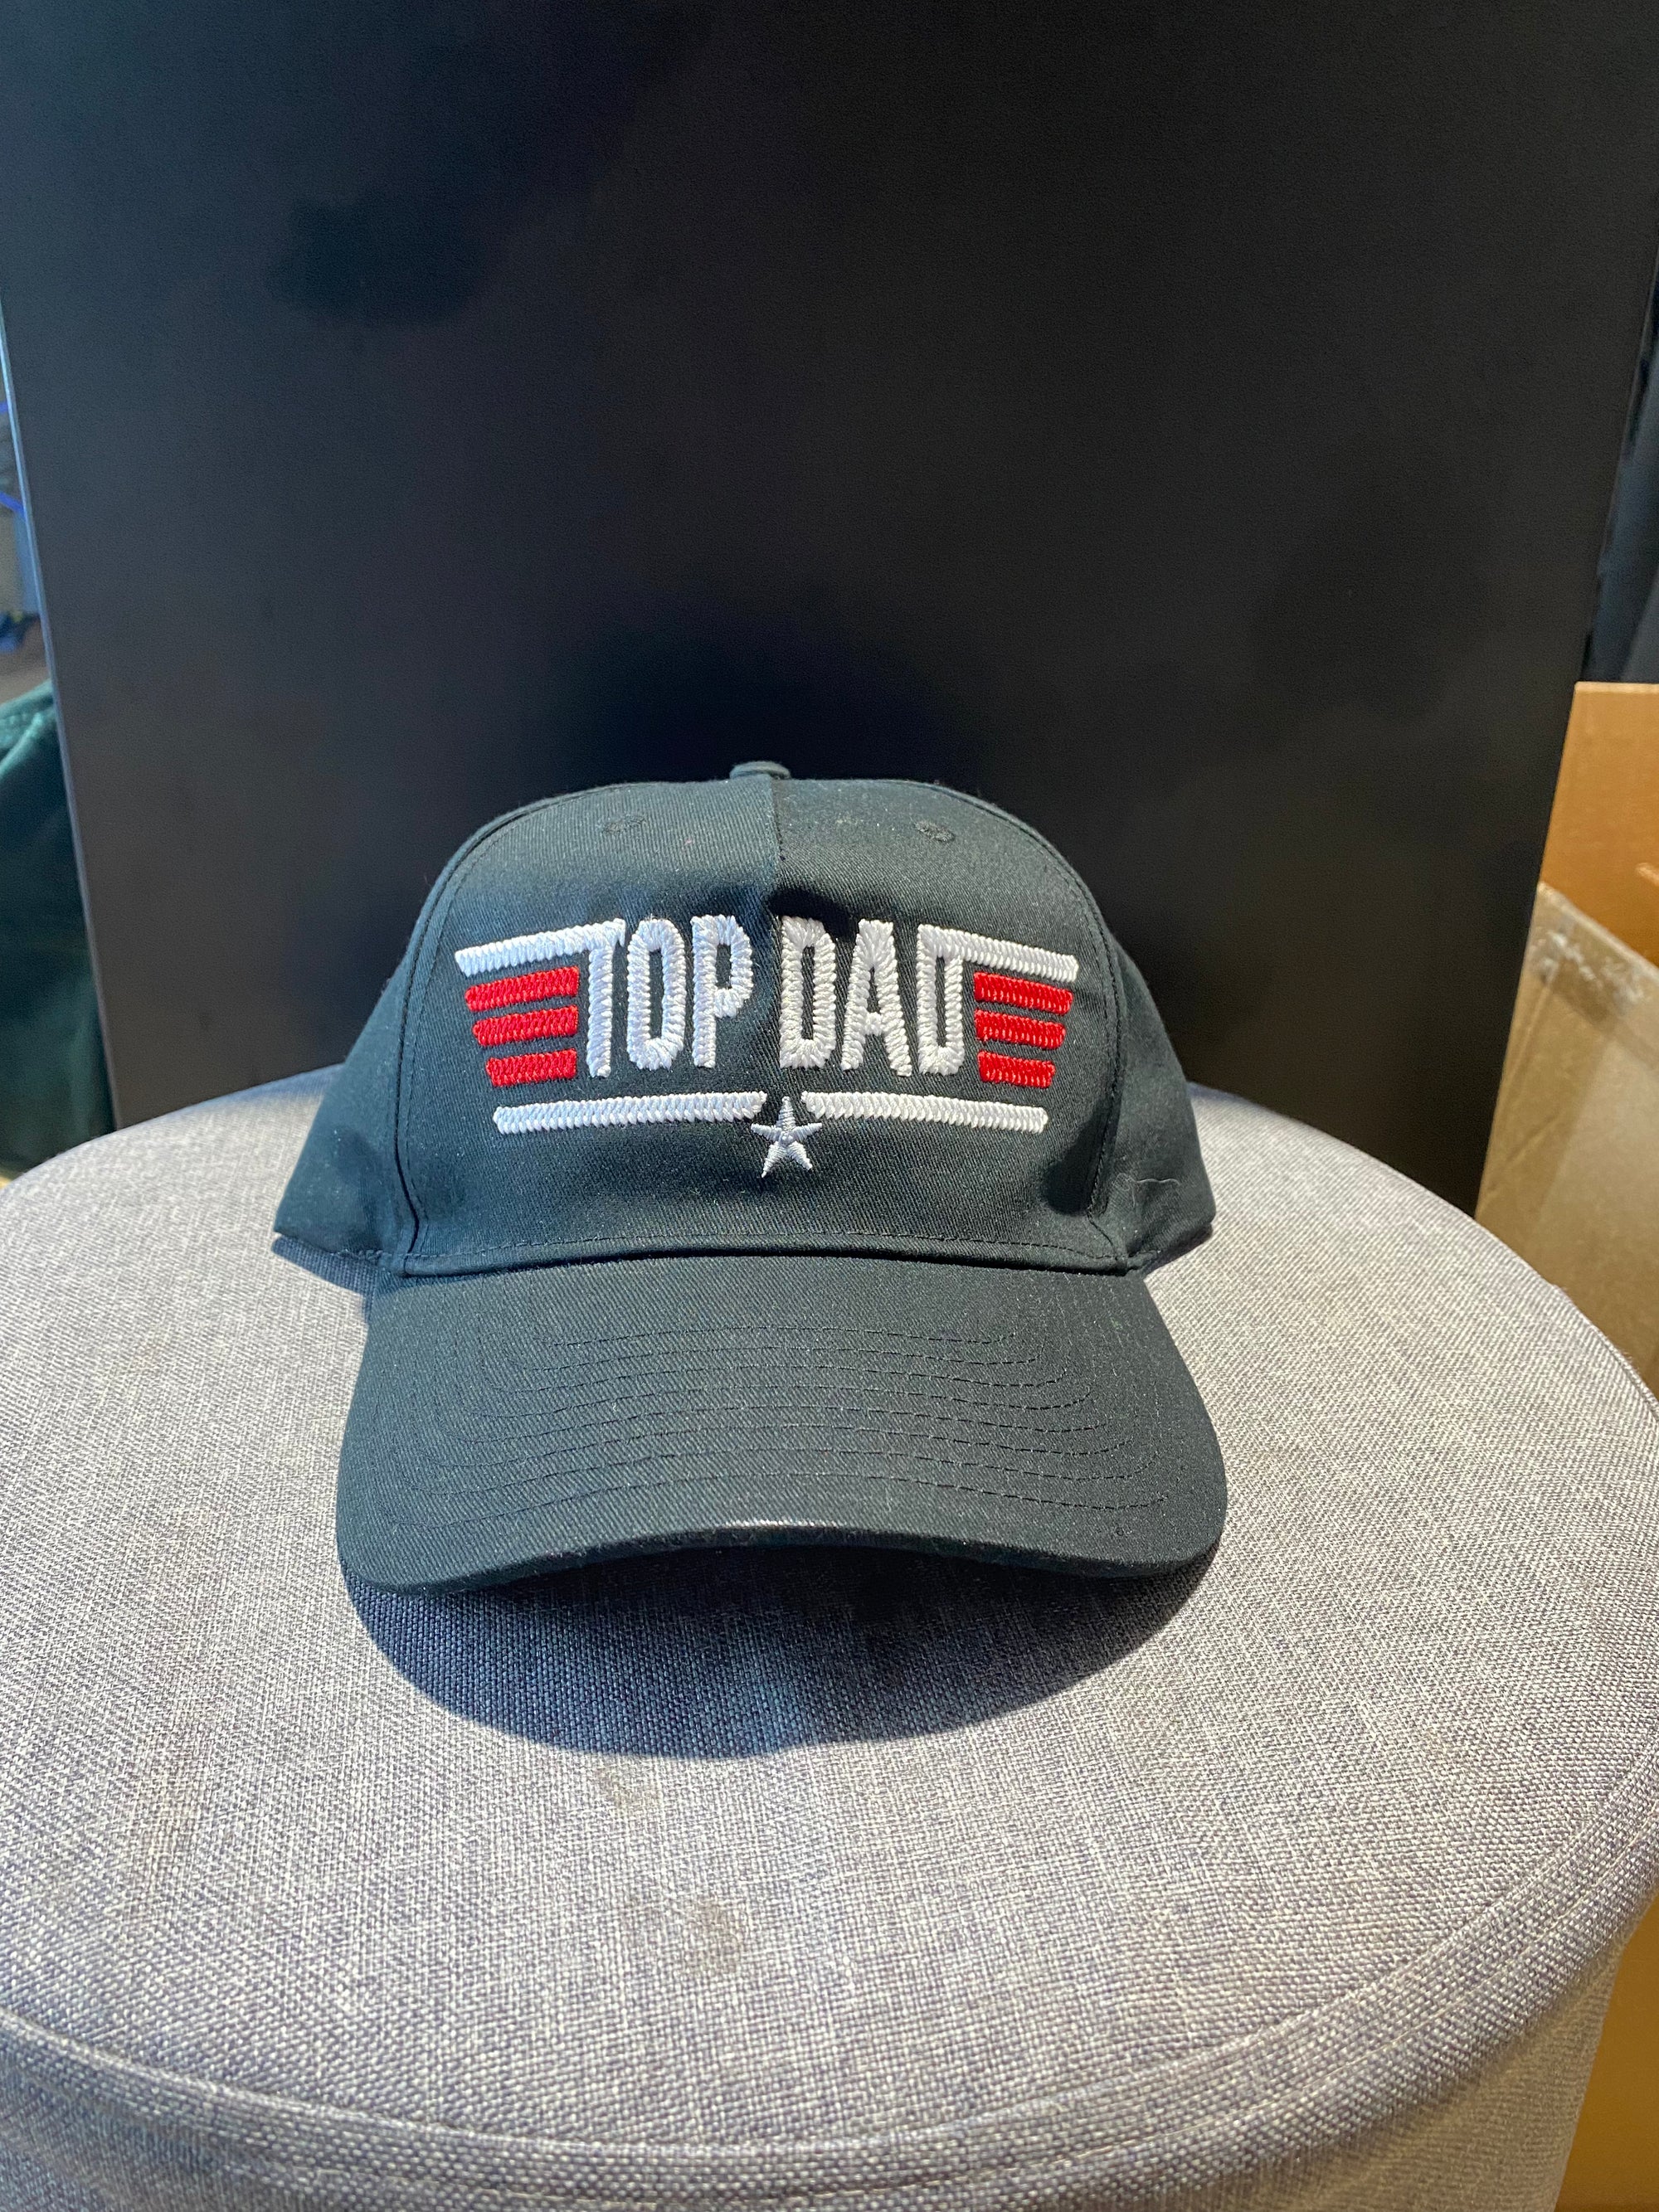 Top Dad cap